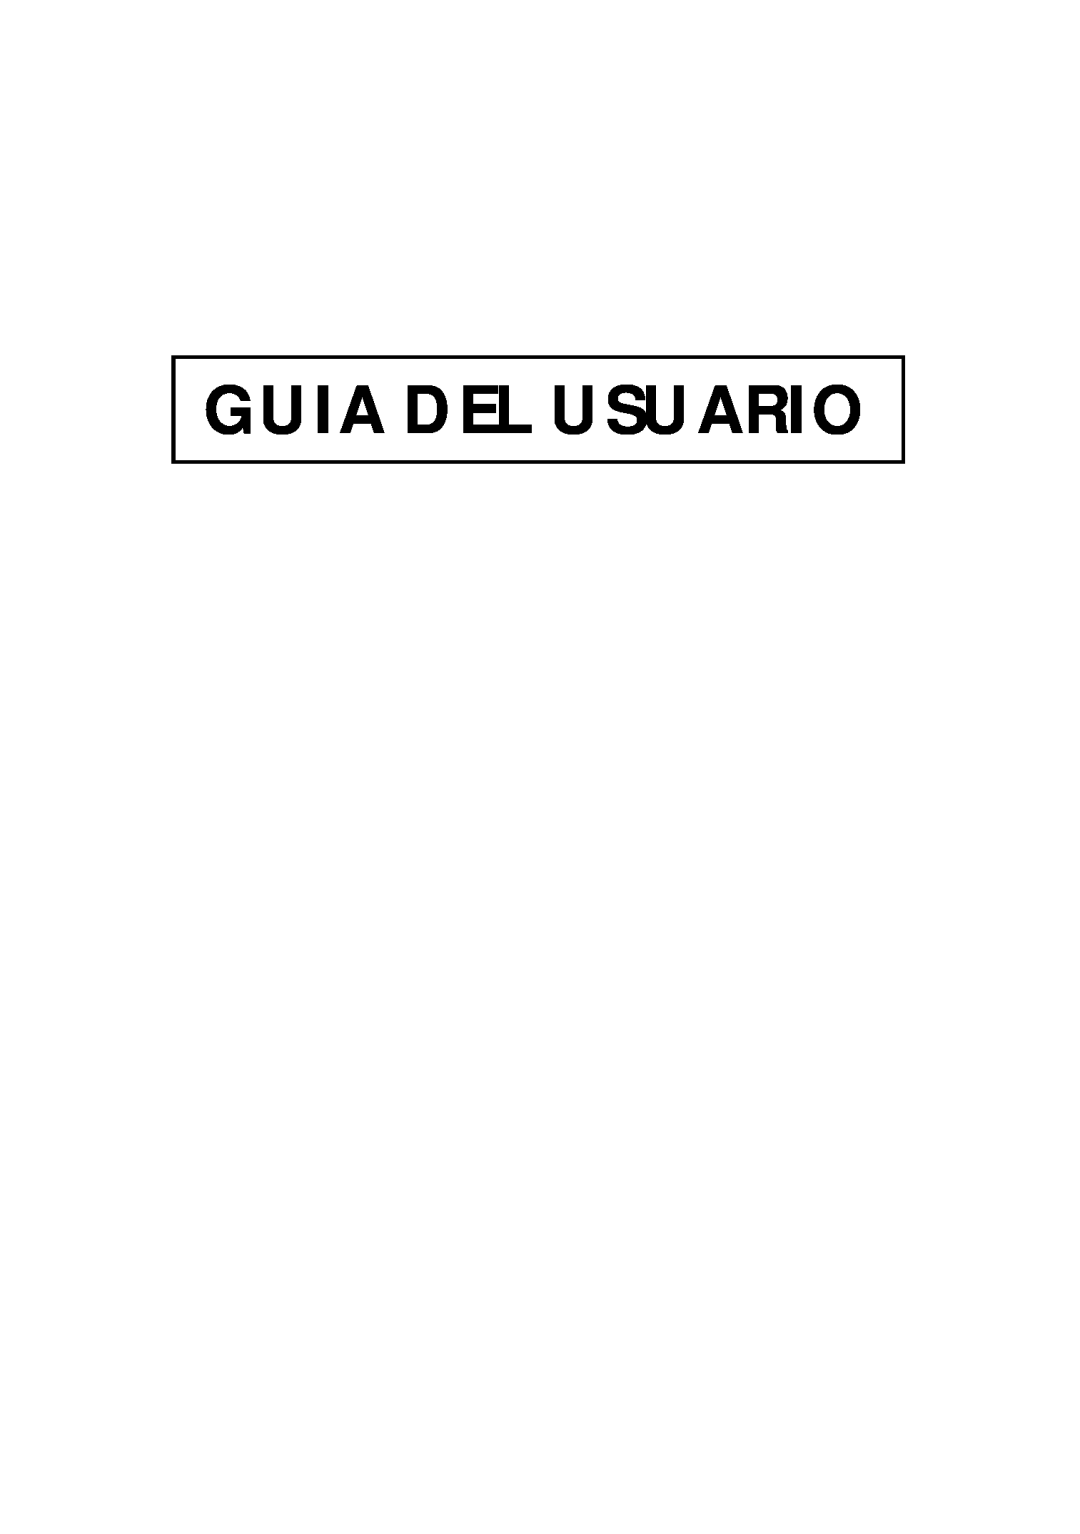 Brother PT-1700 manual Guia Del Usuario 